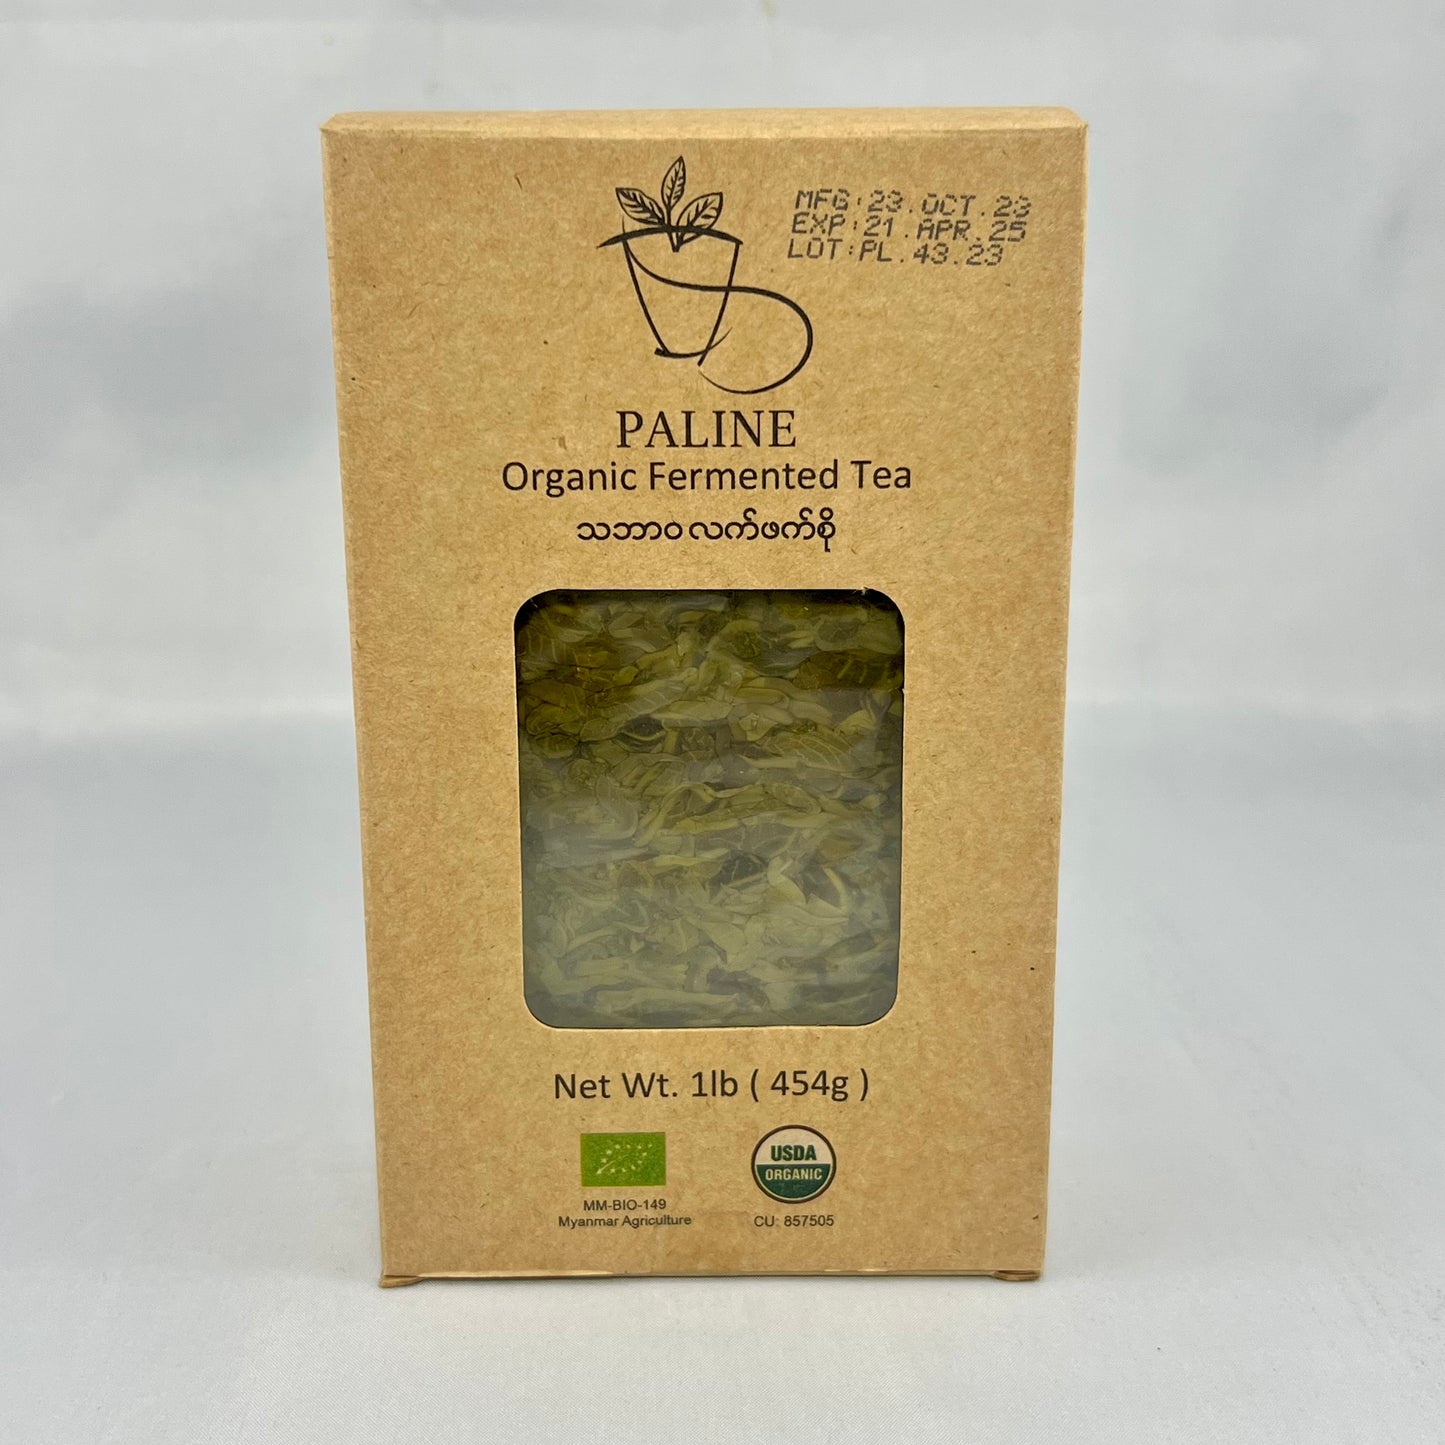 Paline Organic Fermented Tea Leaf (No Seasoning) (ပလိုင်း သဘာဝ လက်ဖက်စို) Bulk Order